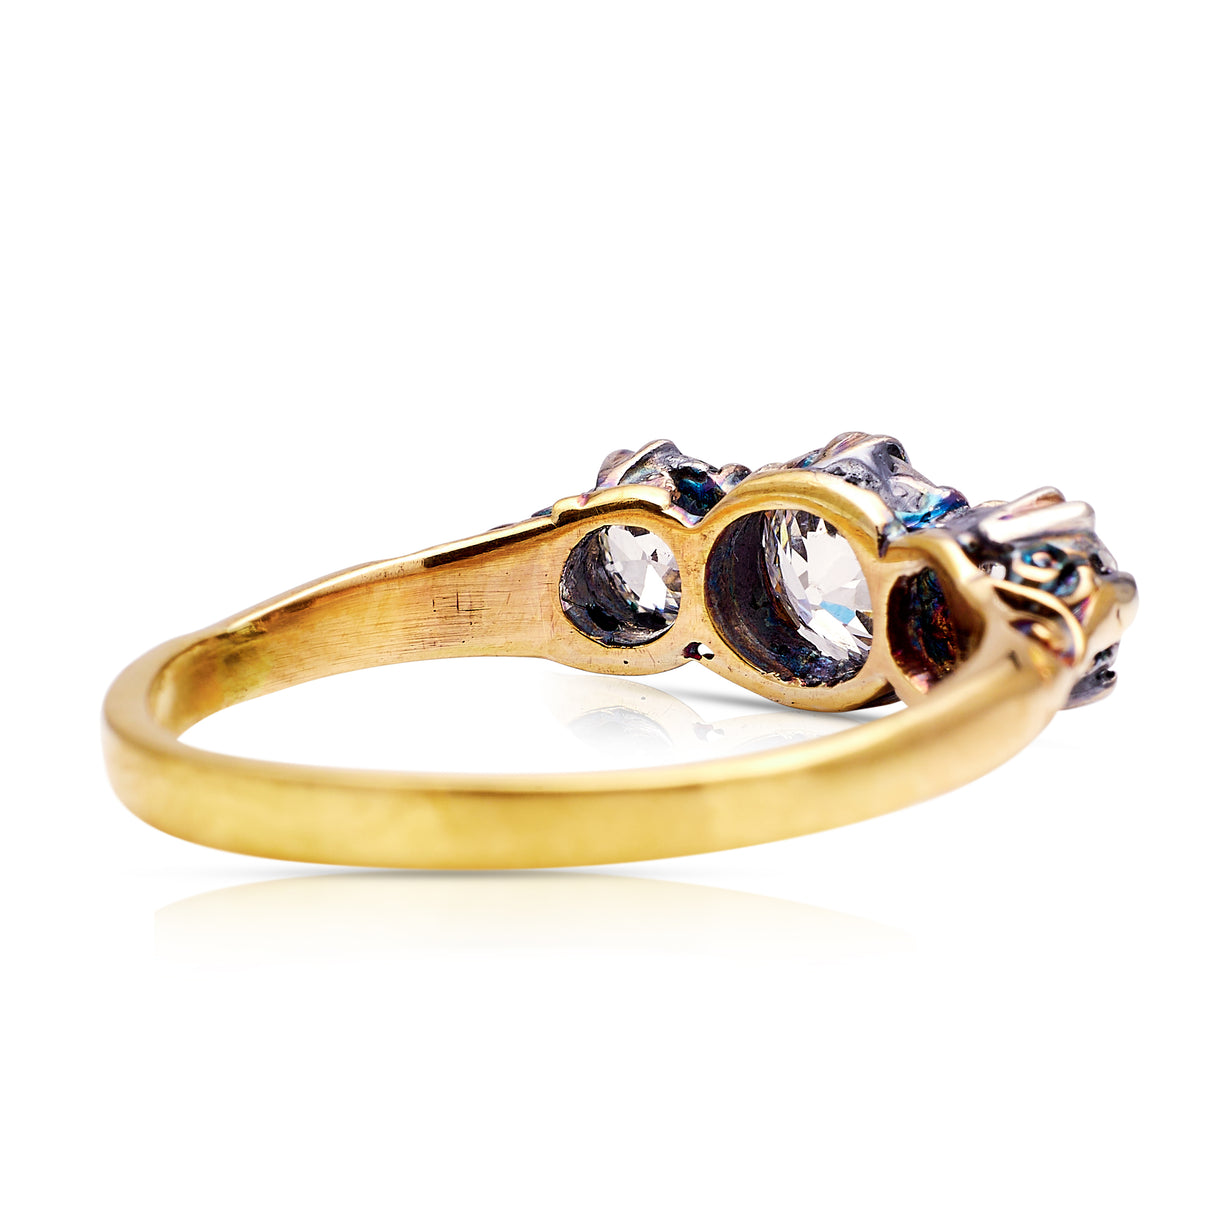 Antique Edwardian three-stone diamond engagement ring, rear view. 